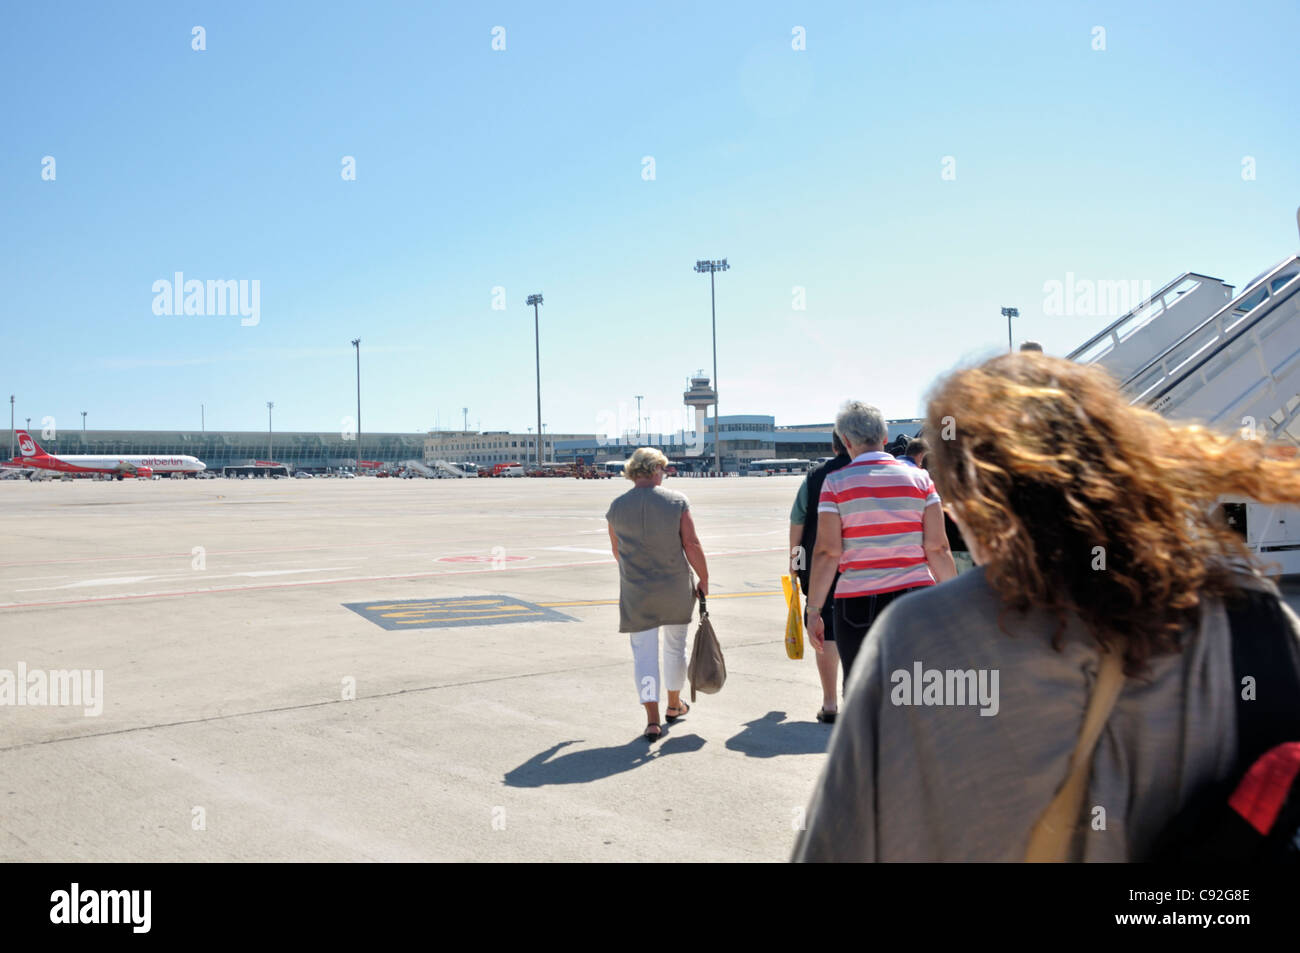 Passengers boarding an airplane Stock Photo